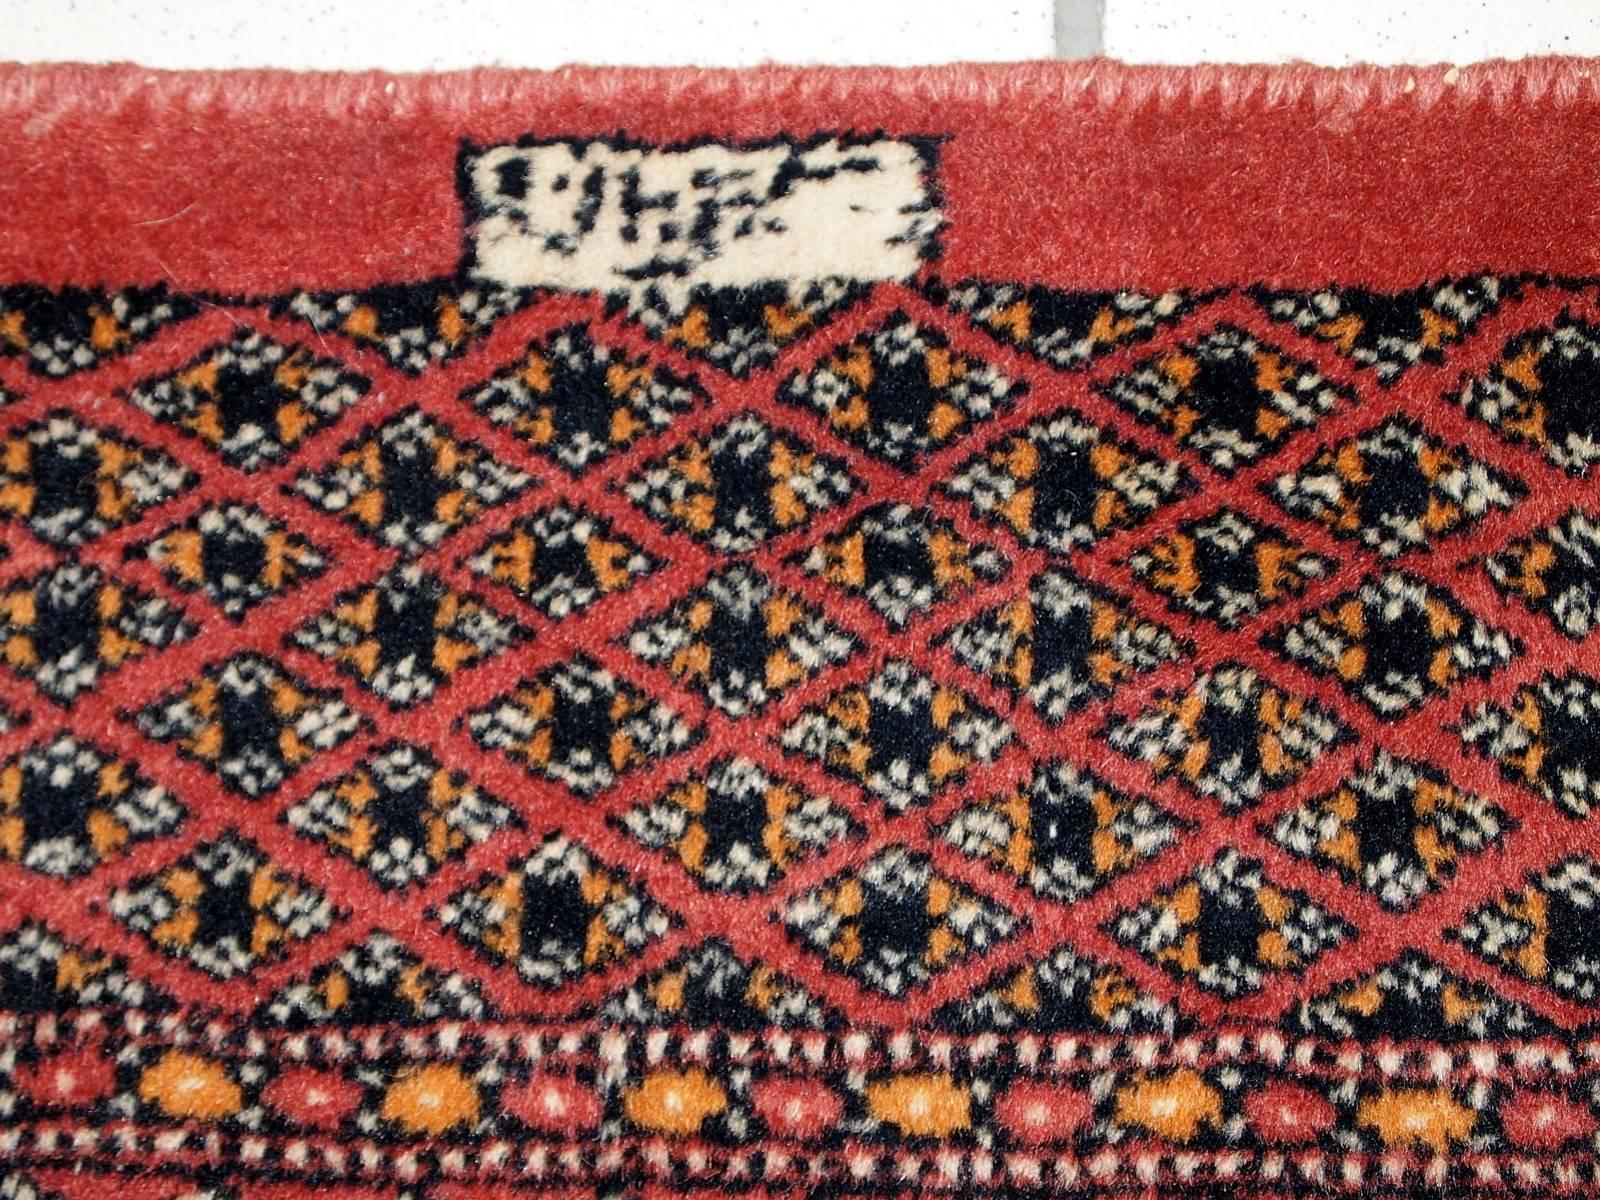 1950s rug